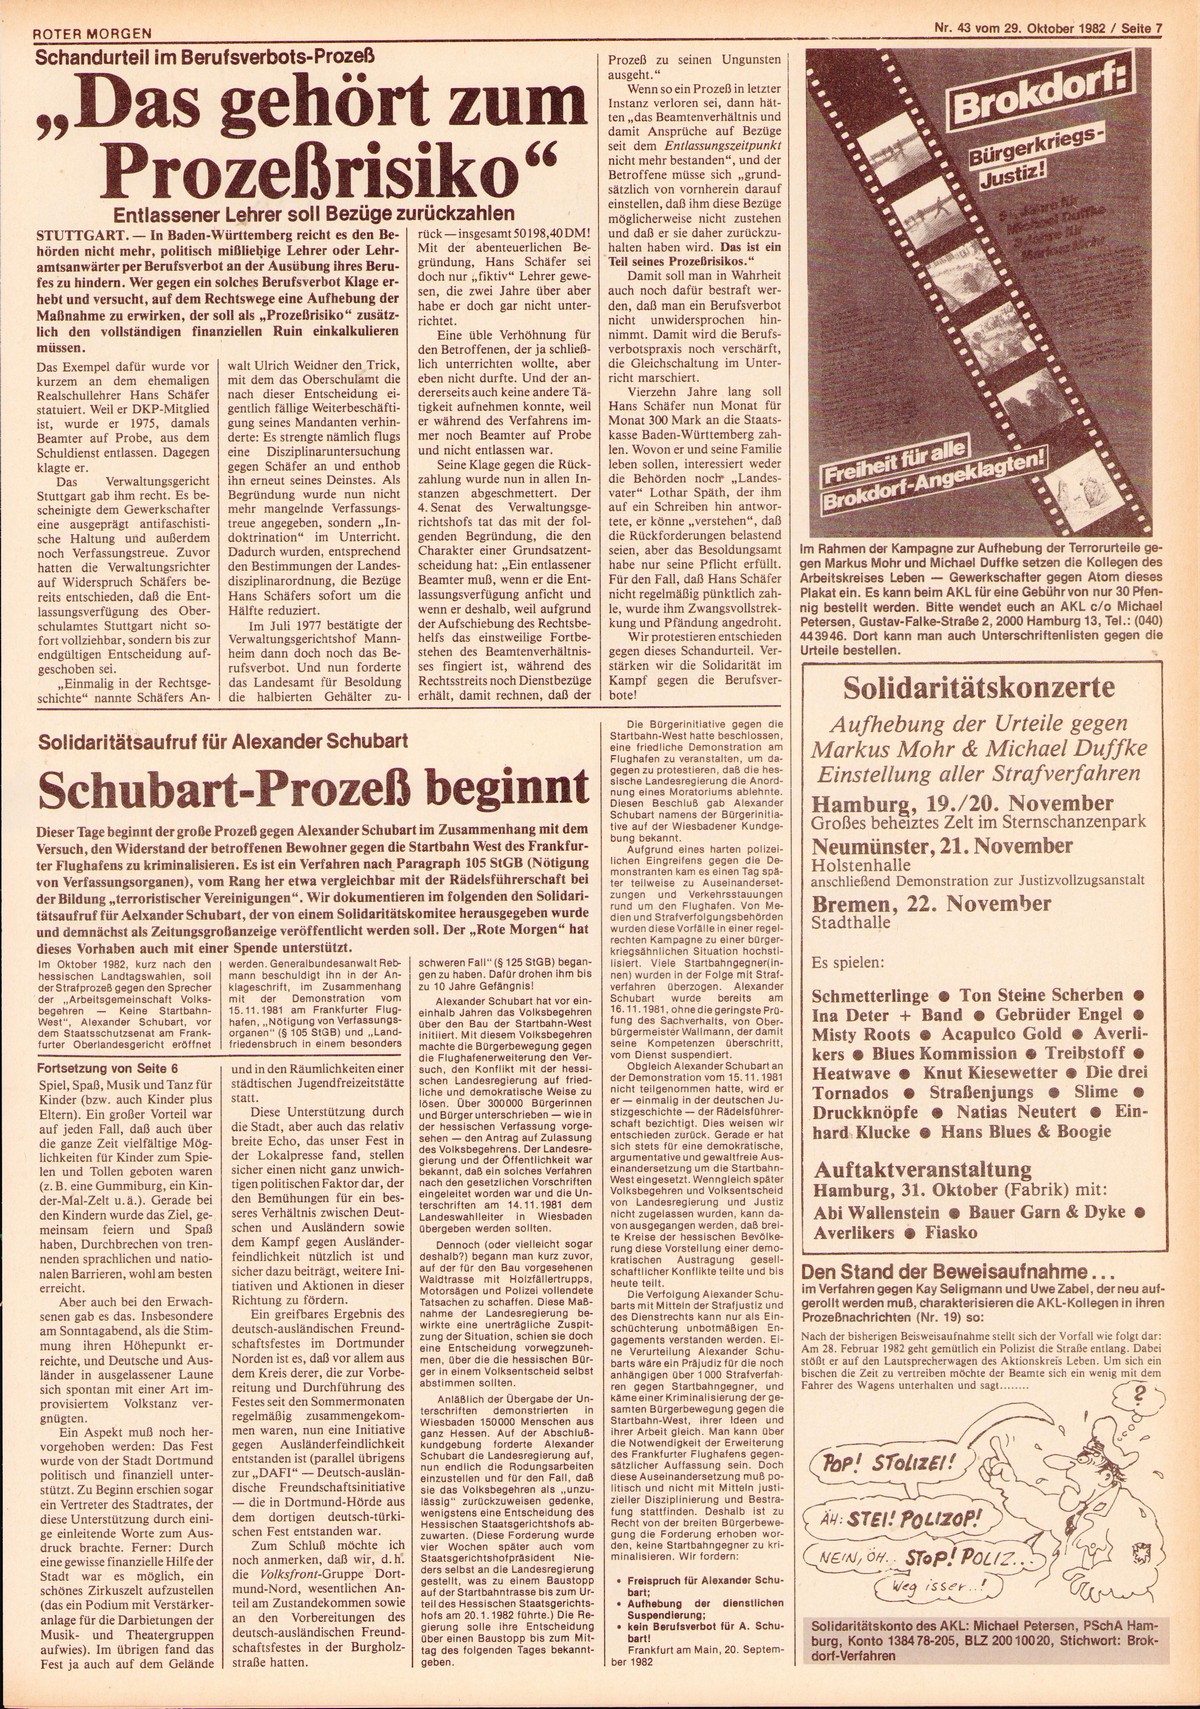 Roter Morgen, 16. Jg., 29. Oktober 1982, Nr. 43, Seite 7